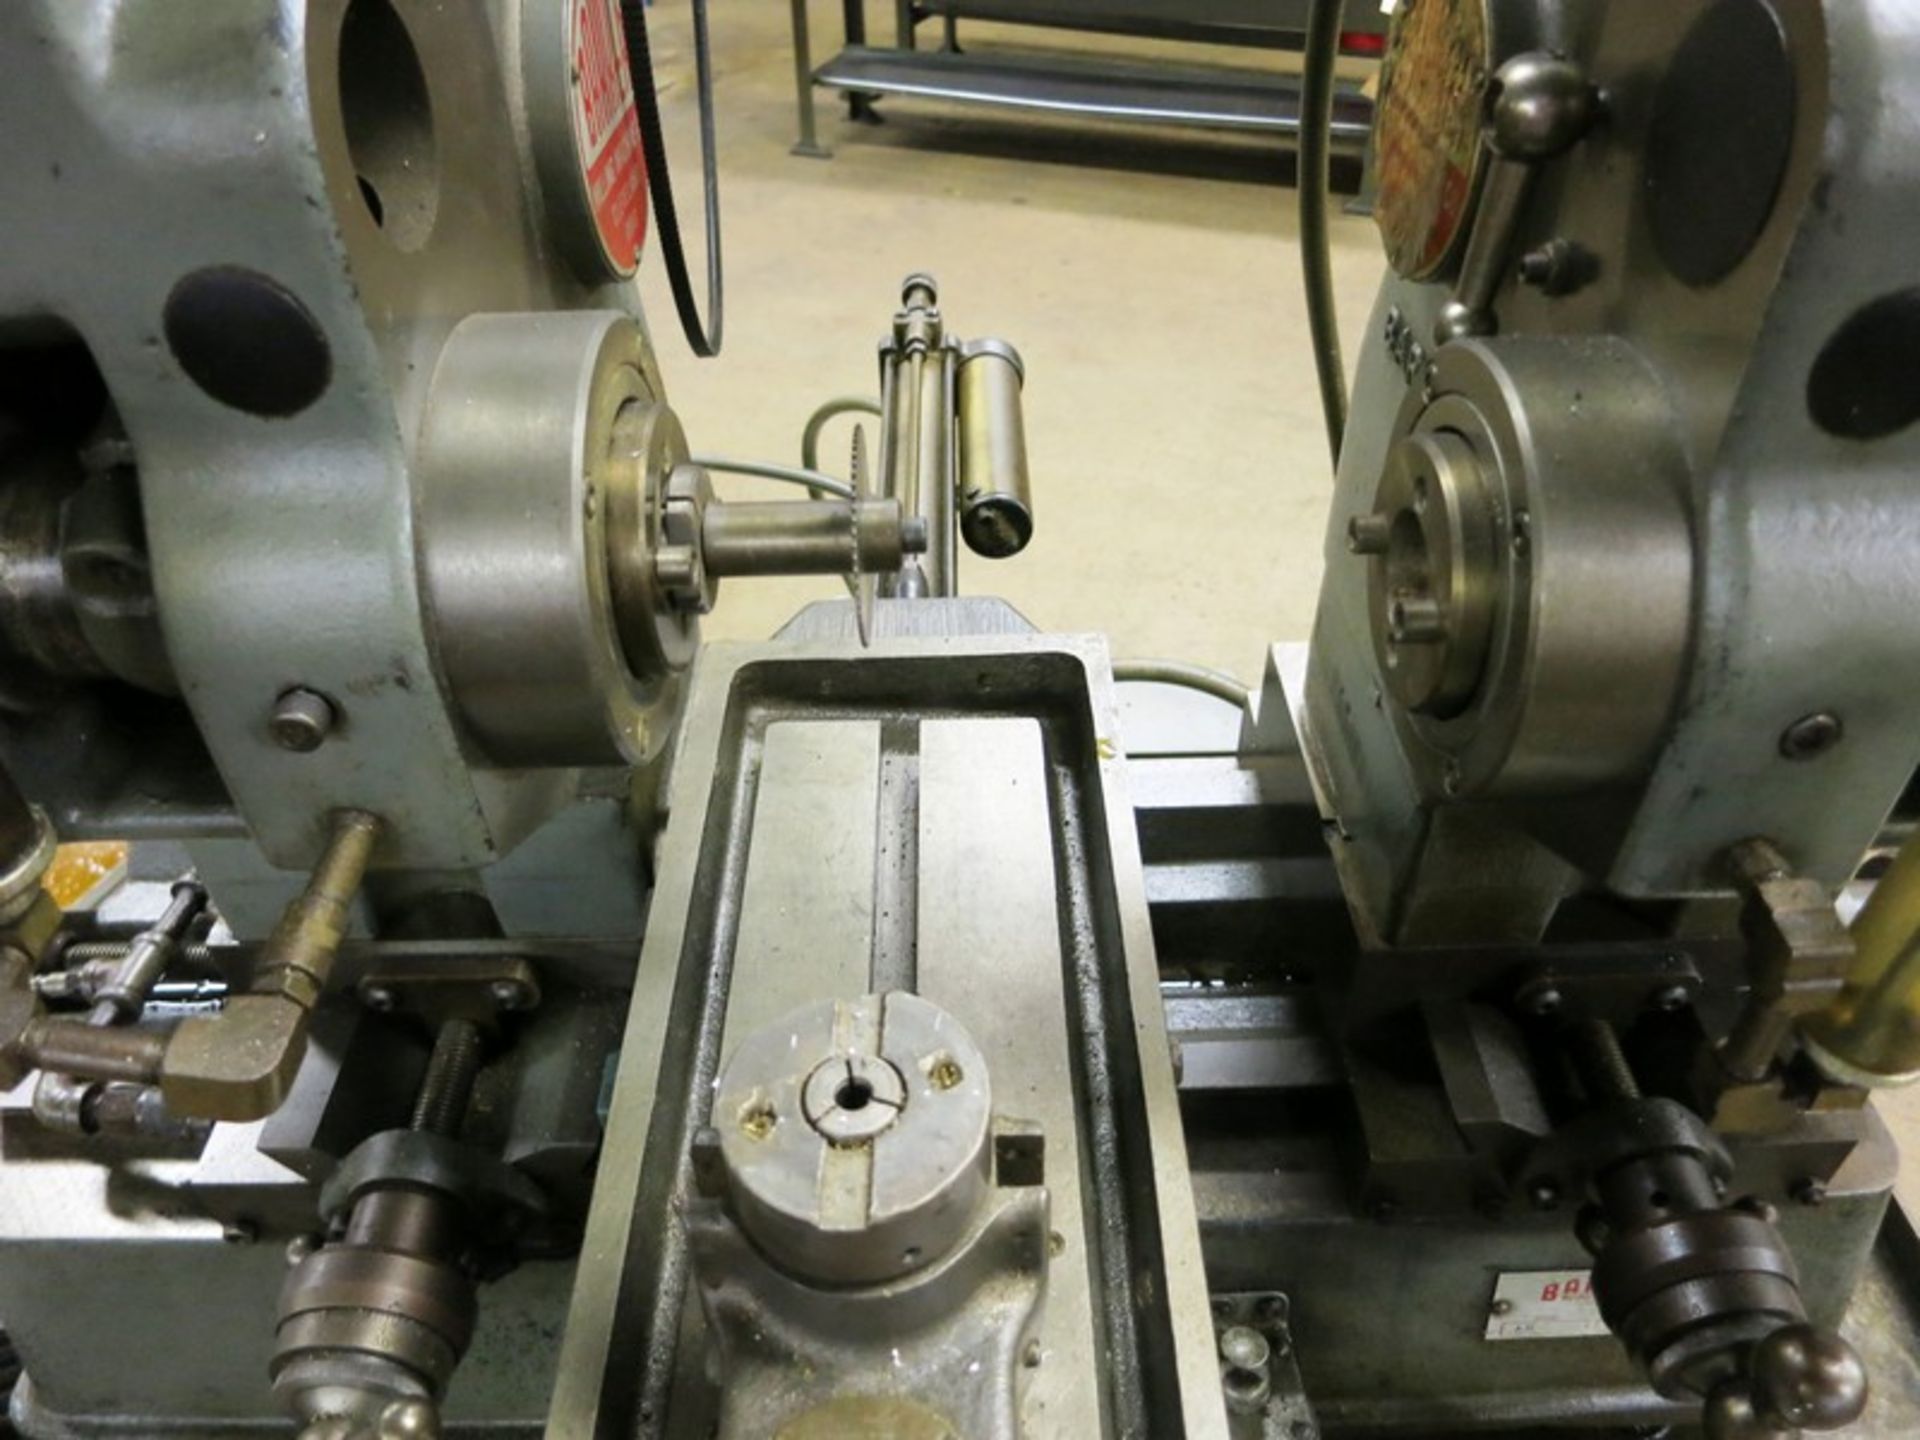 Barker Duplex Model AM Twin Mill, S/N 1481B - Image 3 of 4